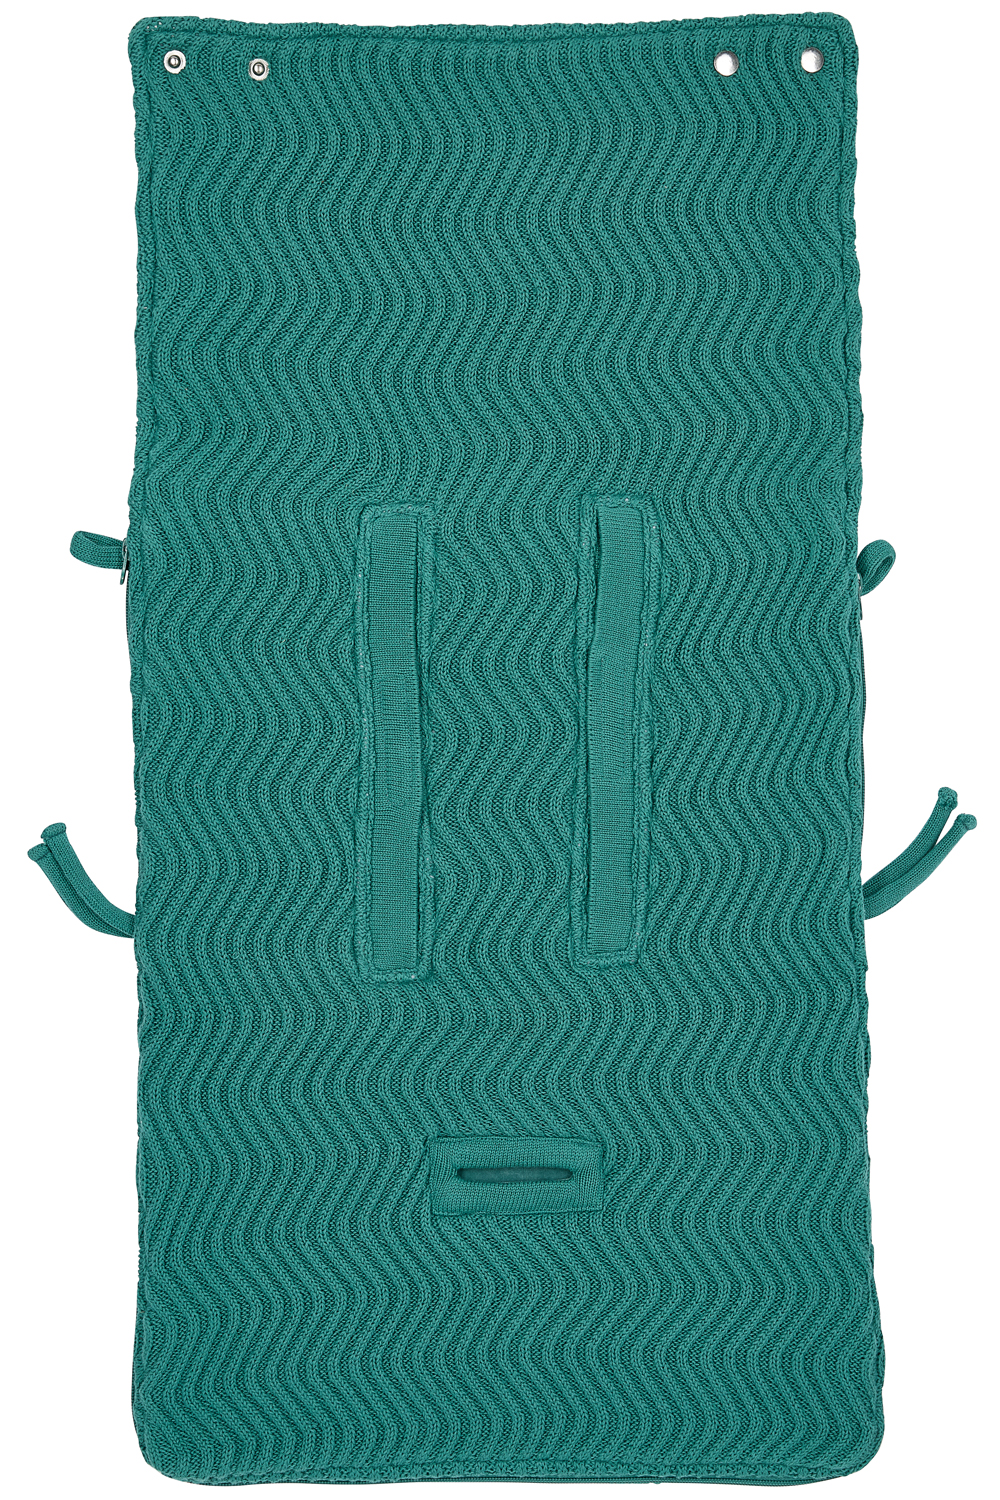 Fußsack Waves - emerald green - 40x82cm